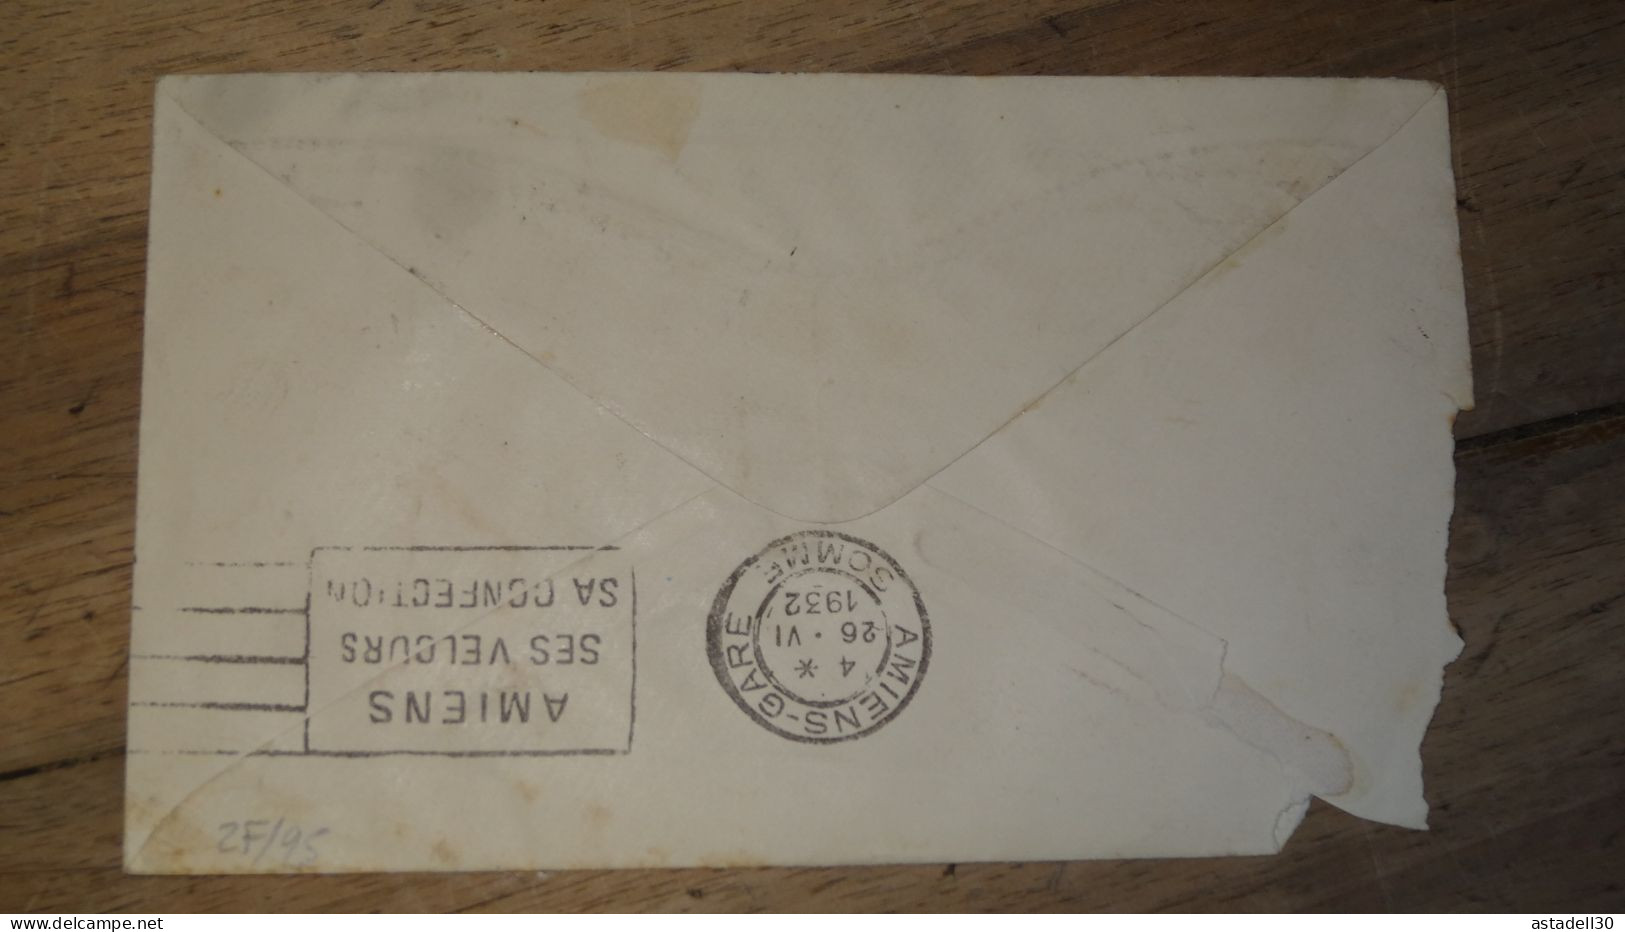 Enveloppe INDIA, SADASHIV PERTH 1932   ......... Boite1 ...... 240424-57 - 1911-35 Koning George V